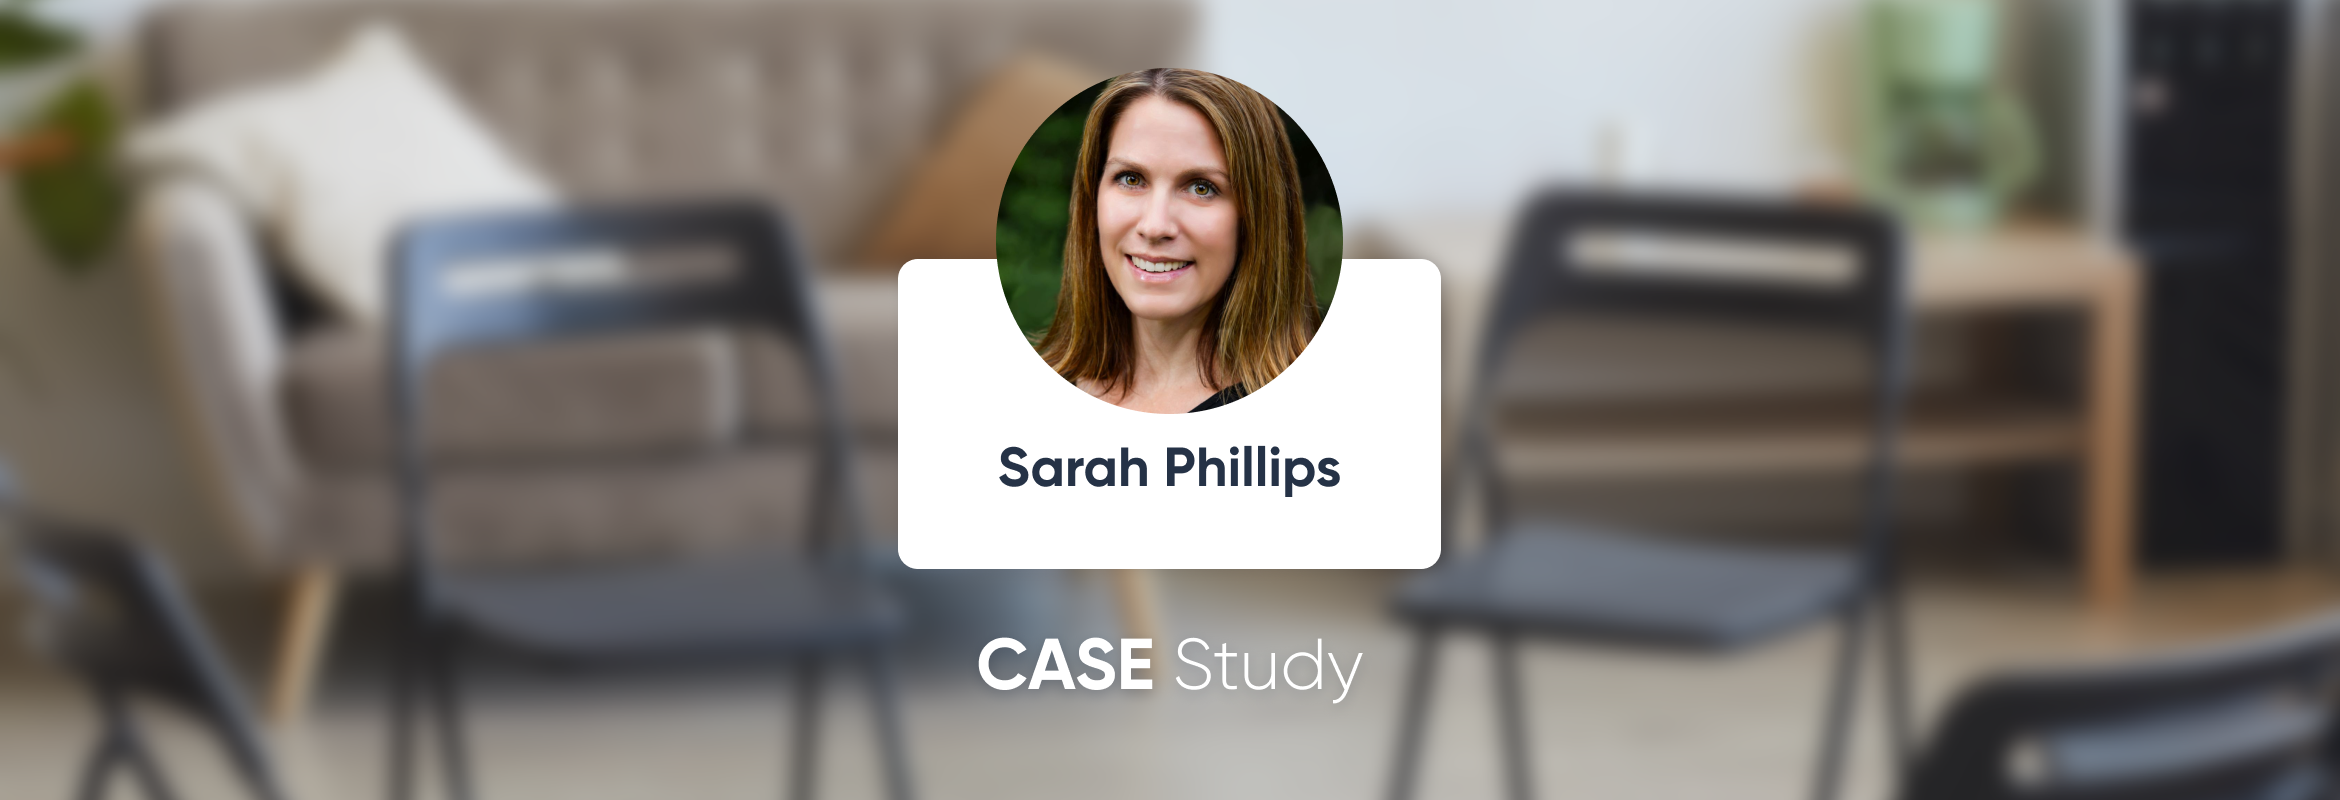 Sarah Phillips, LCSW - Case Study